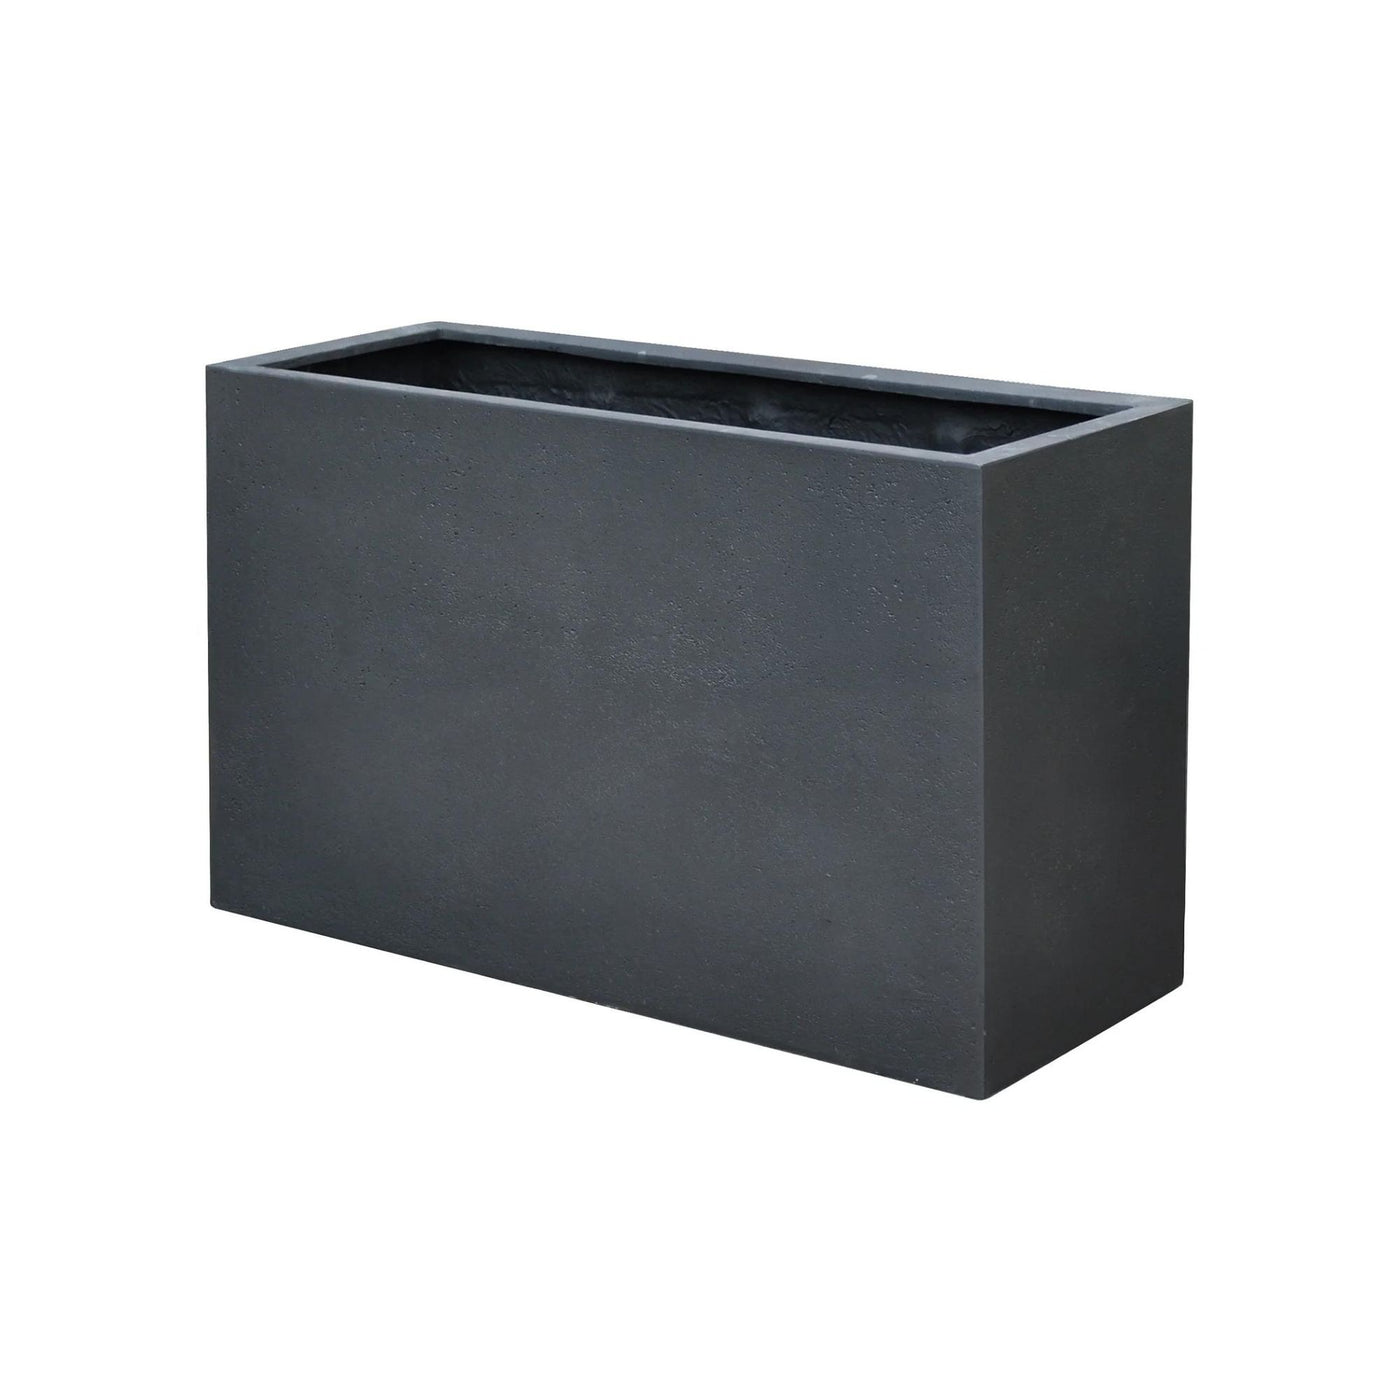 Mid.box Concrete Surface Charcoal